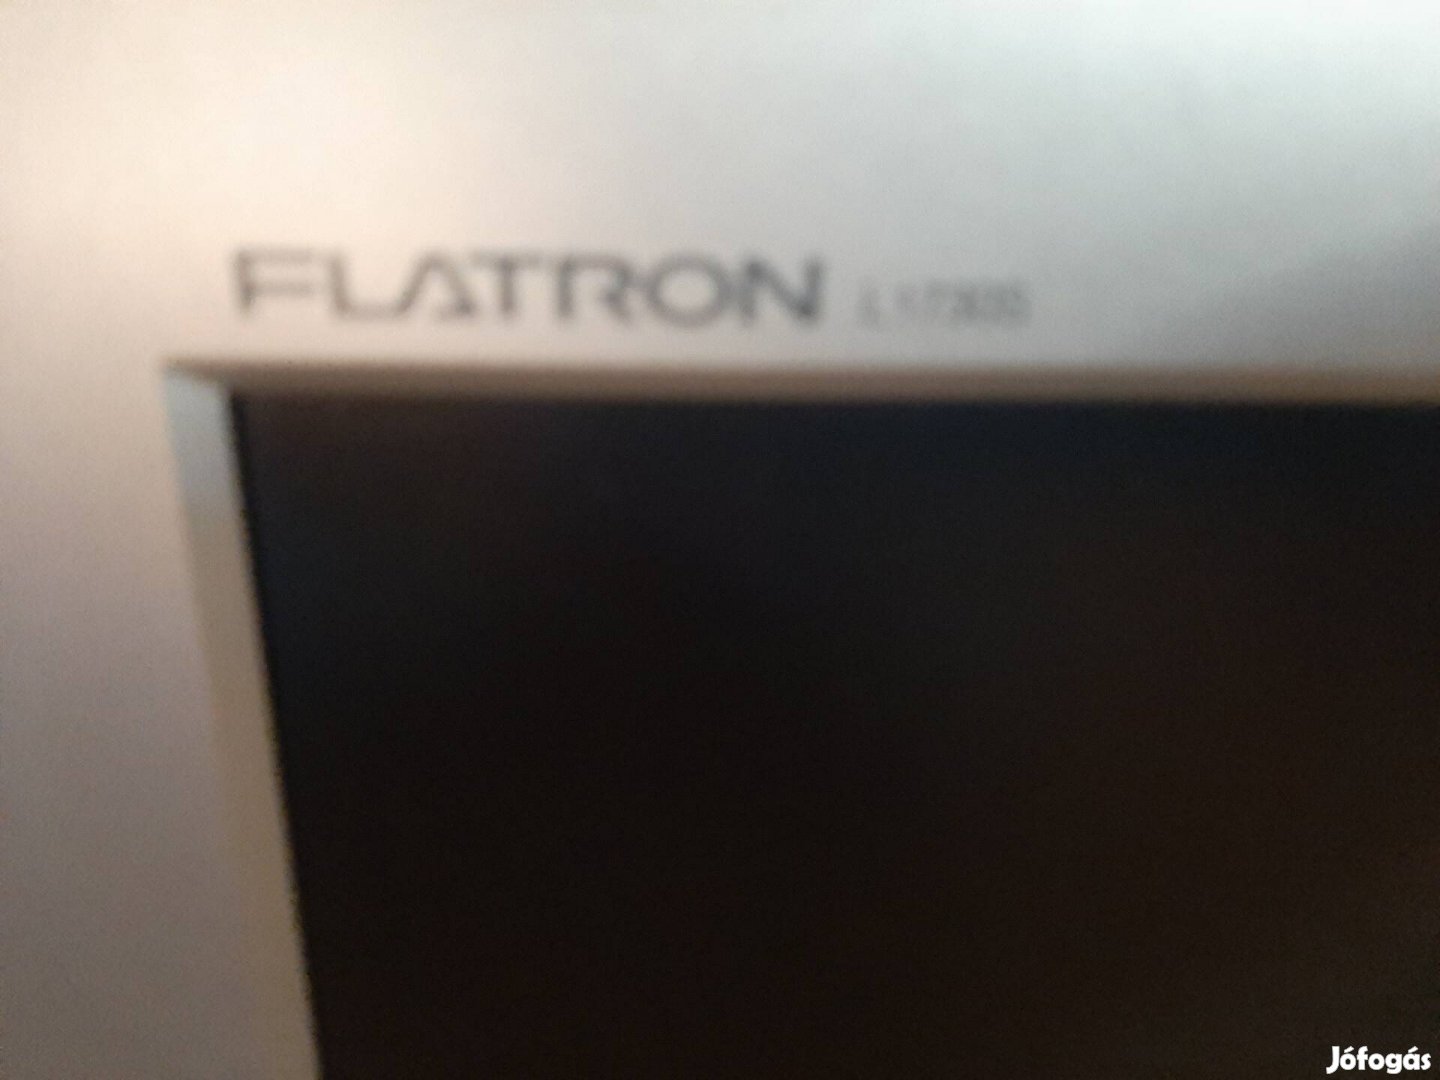 Flatron LCD monitor L173OS